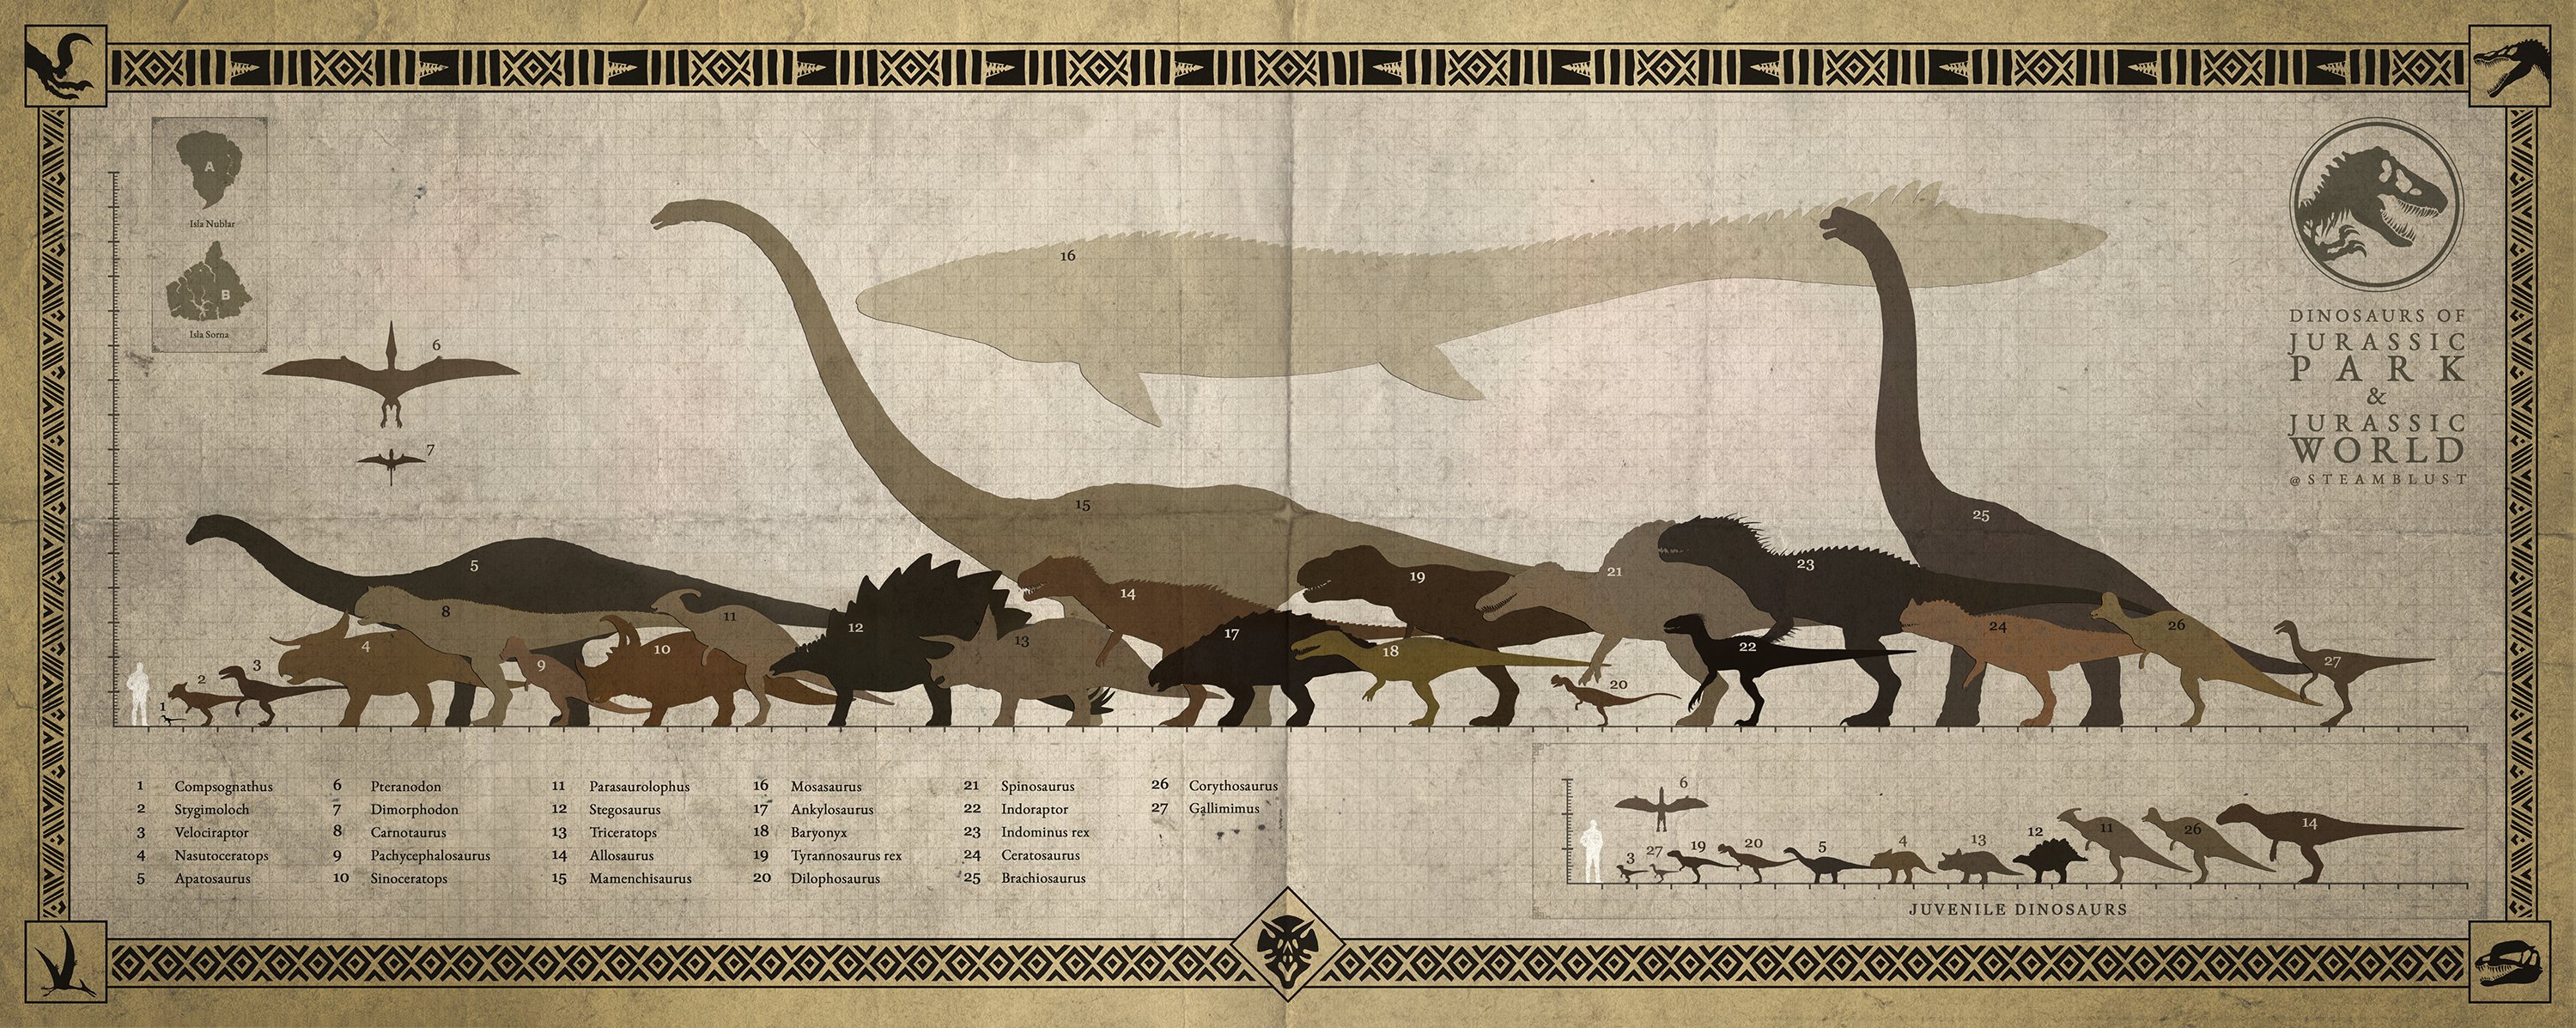 dinosauri of jurassic pack e jurassic world by 3383383563 on DeviantArt